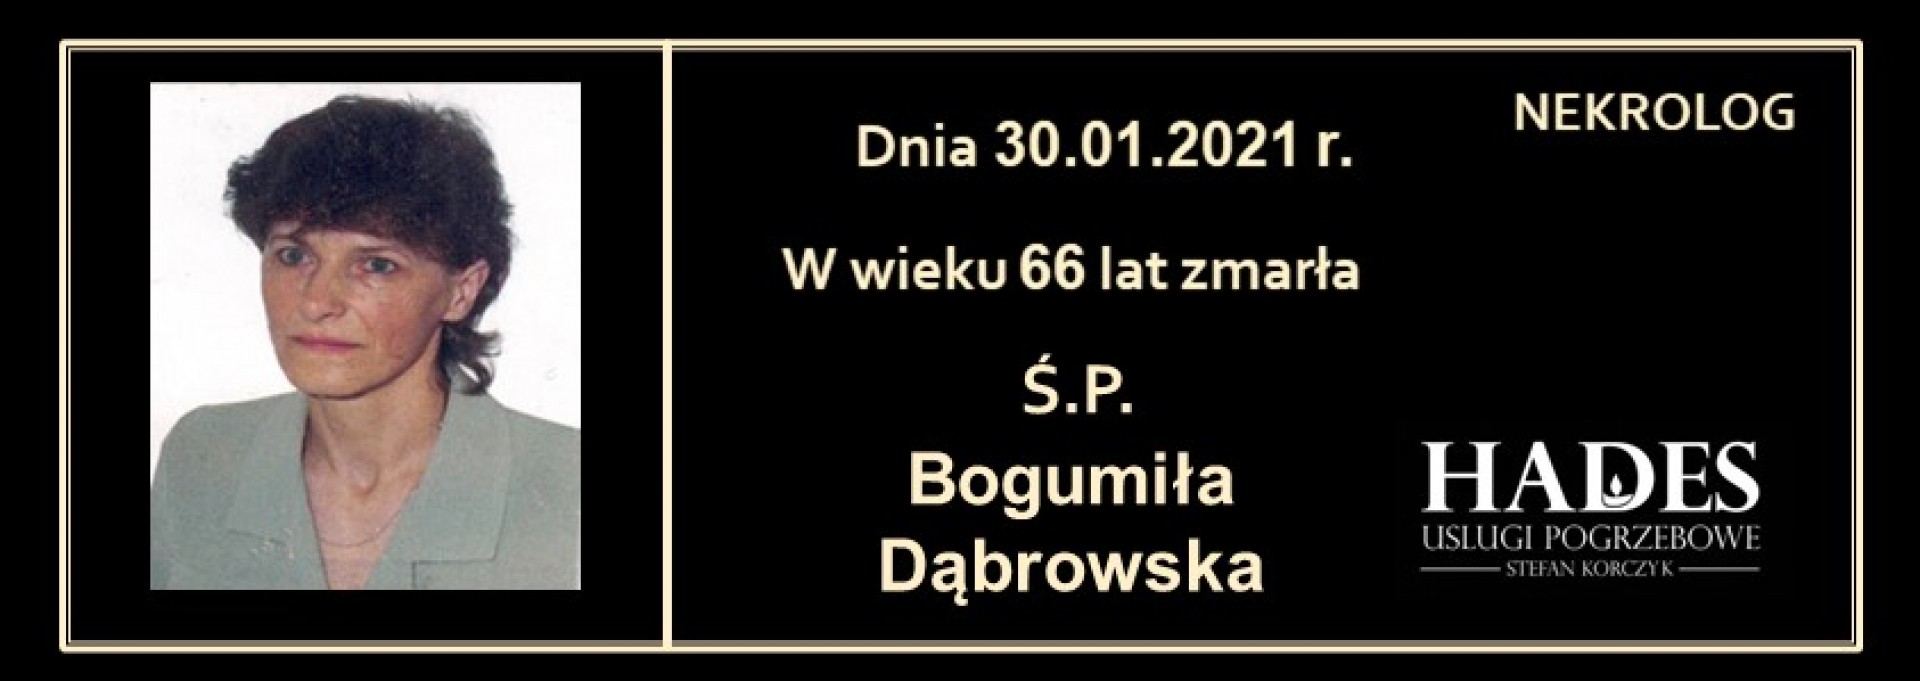 Ś.P. Bogumiła Dąbrowska